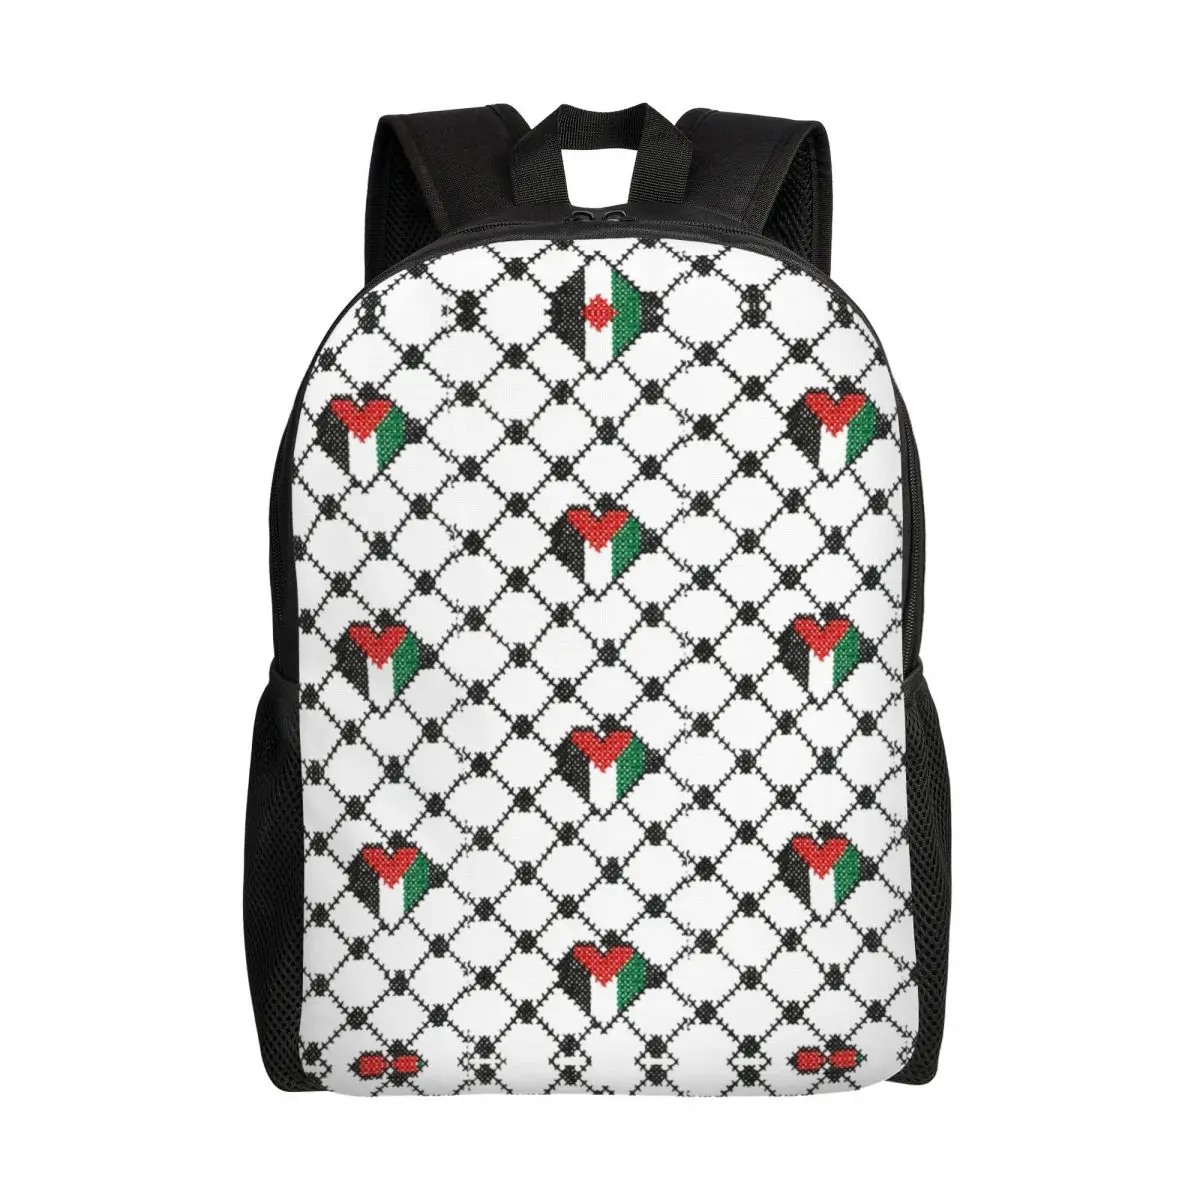 

Palestinian Flag Heart Travel Backpack School Computer Bookbag Palestine Hatta Kufiya Embroidery College Student Daypack Bags